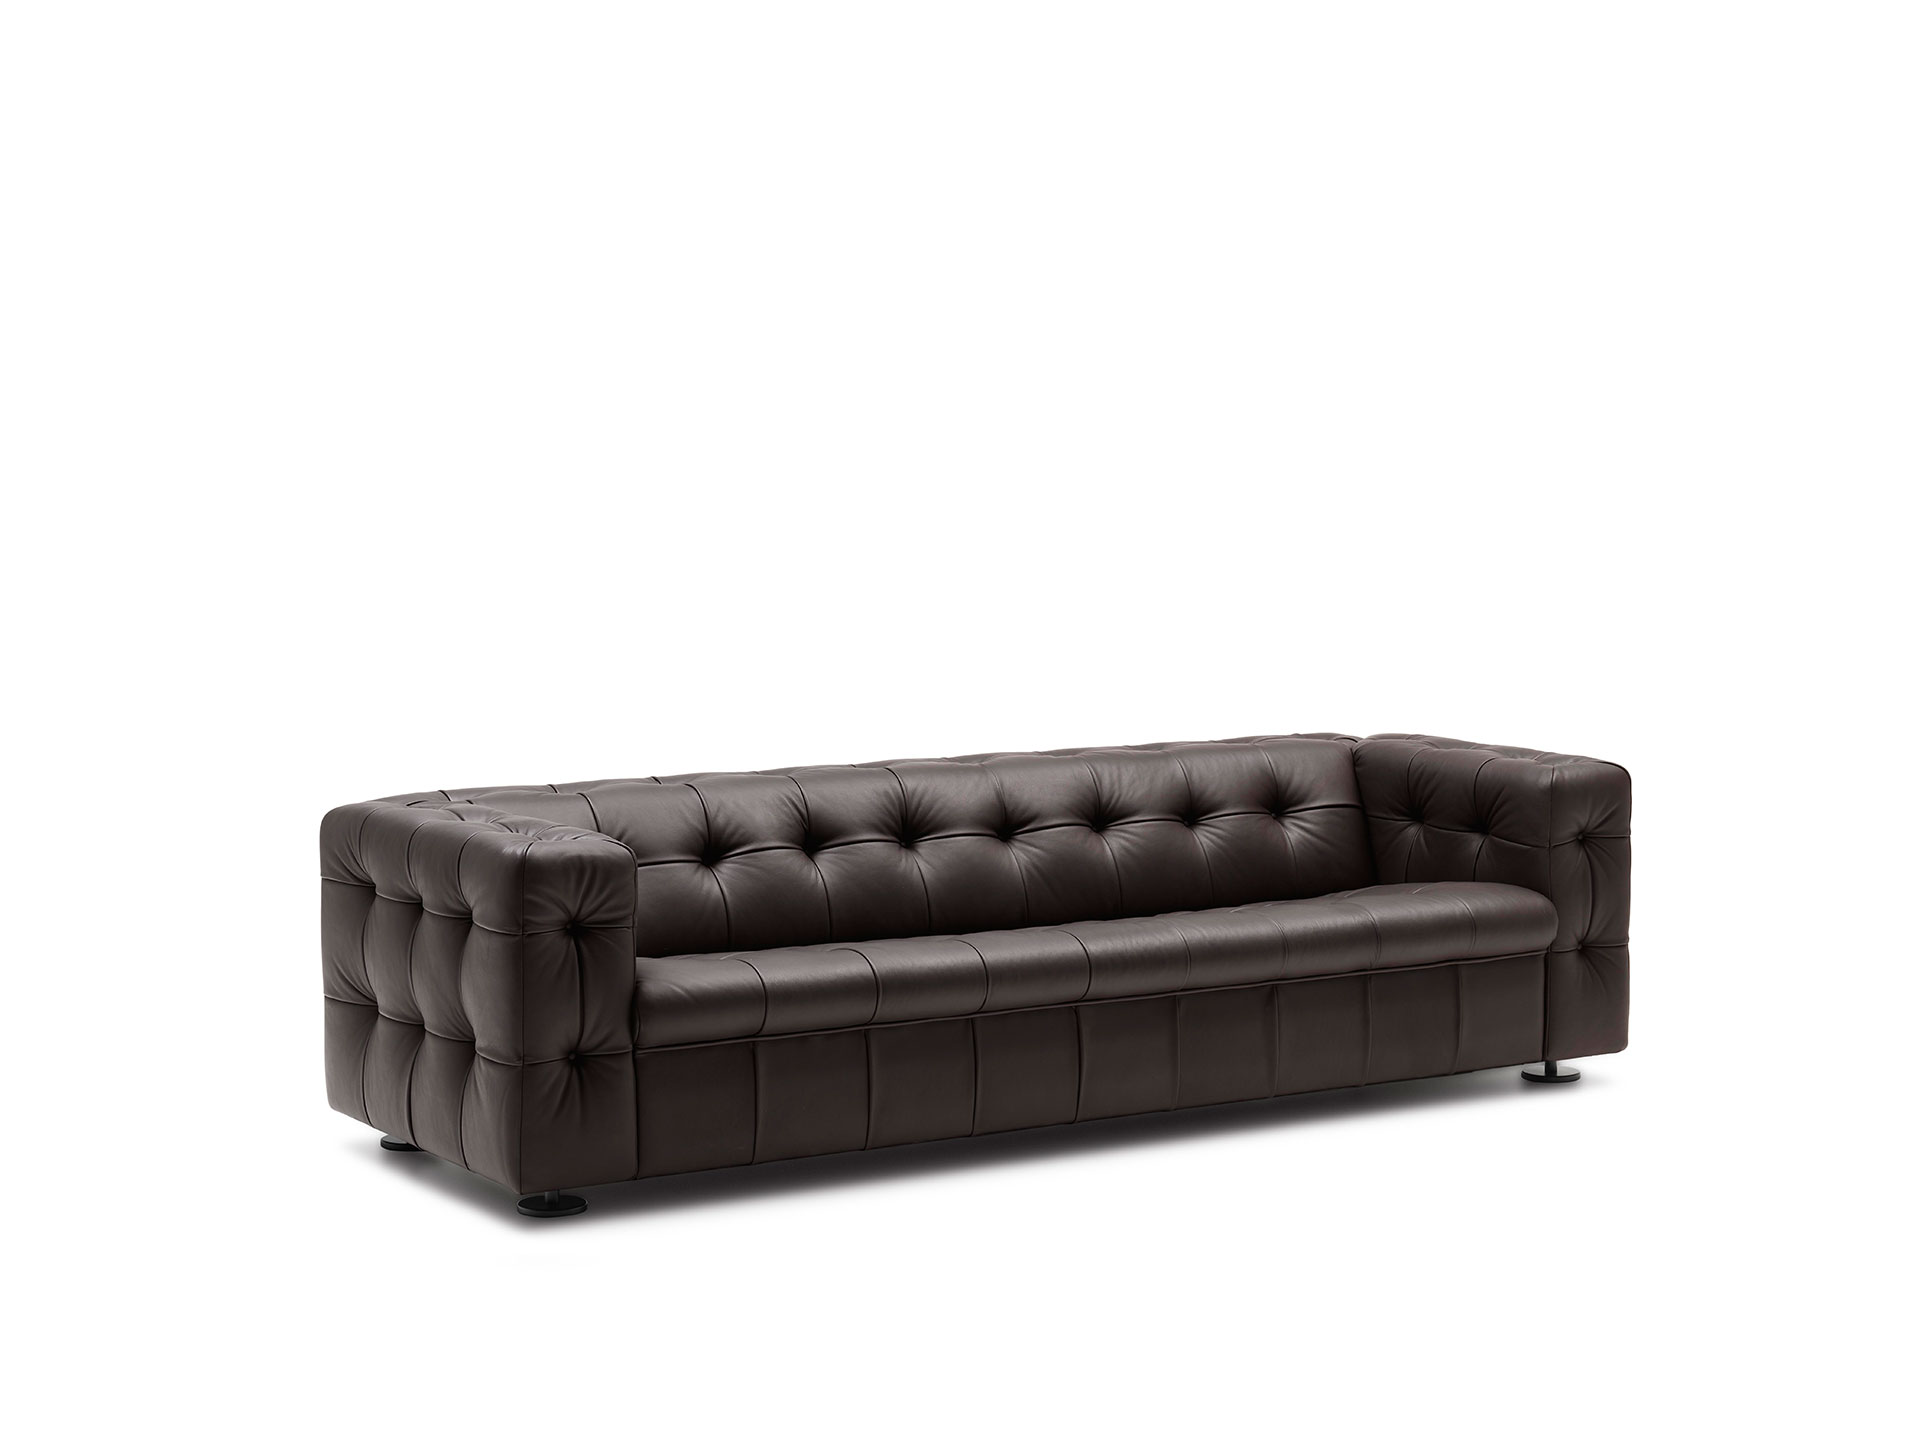 RH-306 Sofa